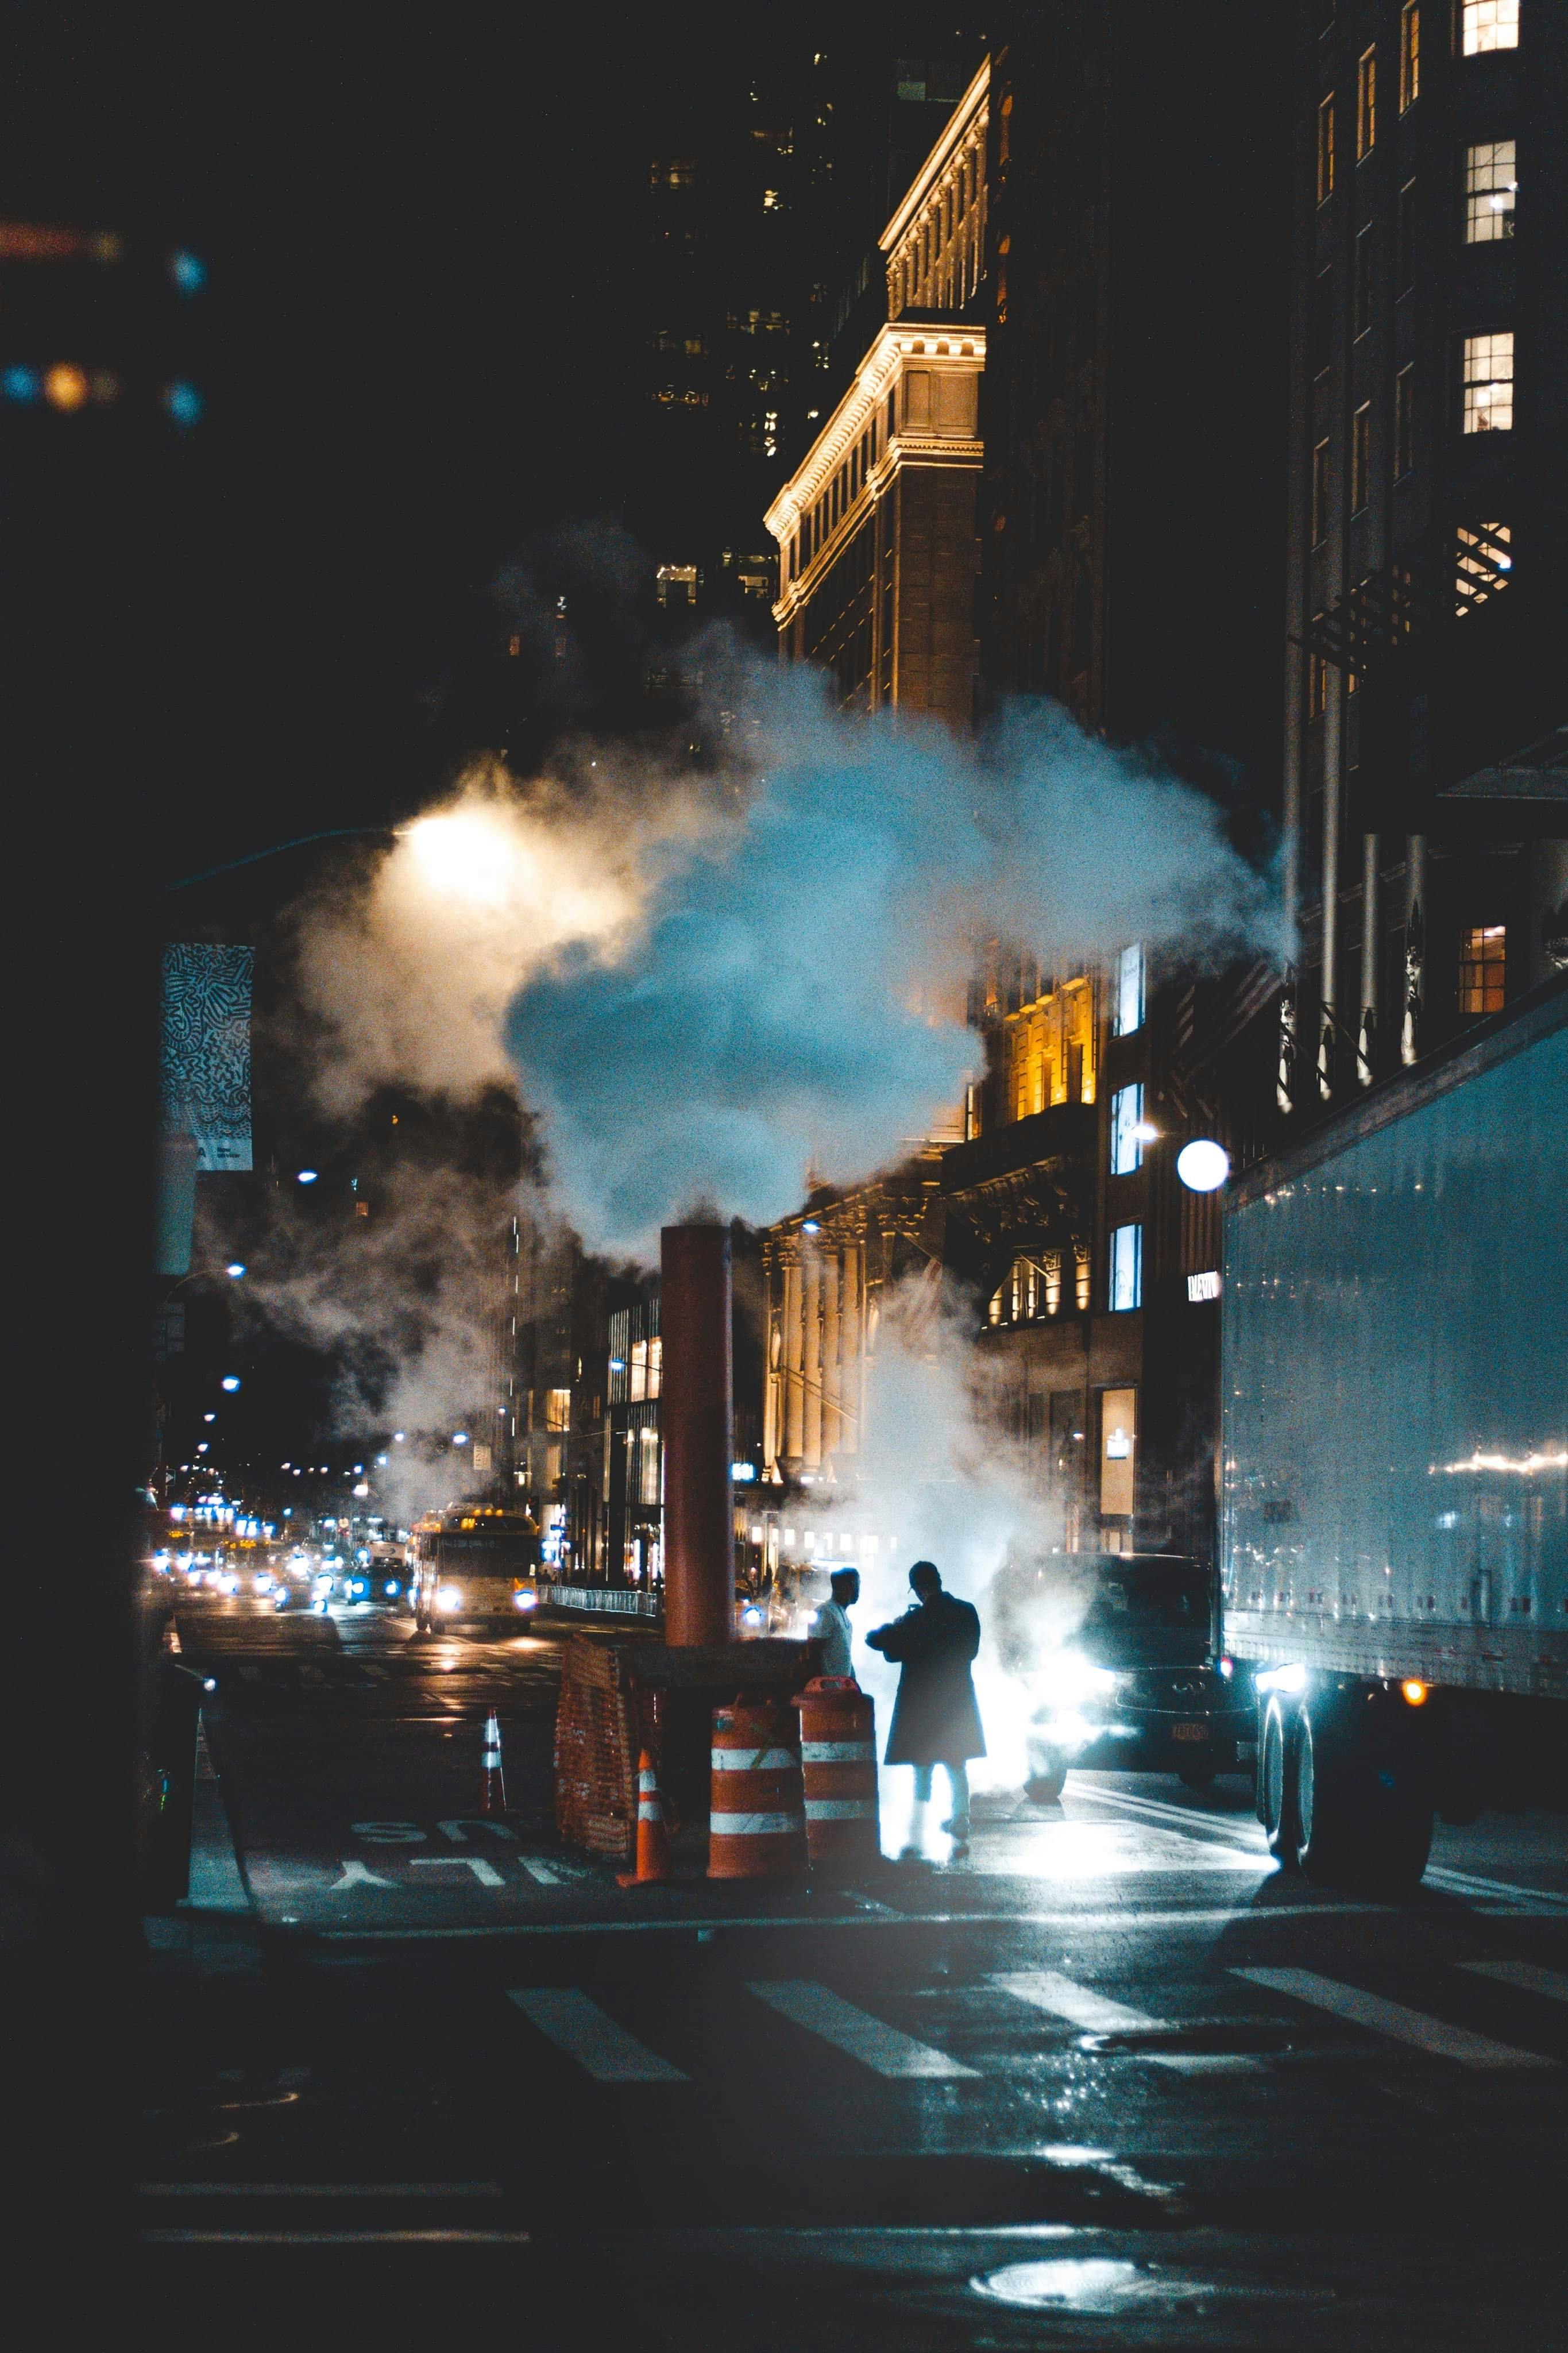 unrecognizable men interacting on night city street under smoke cloud